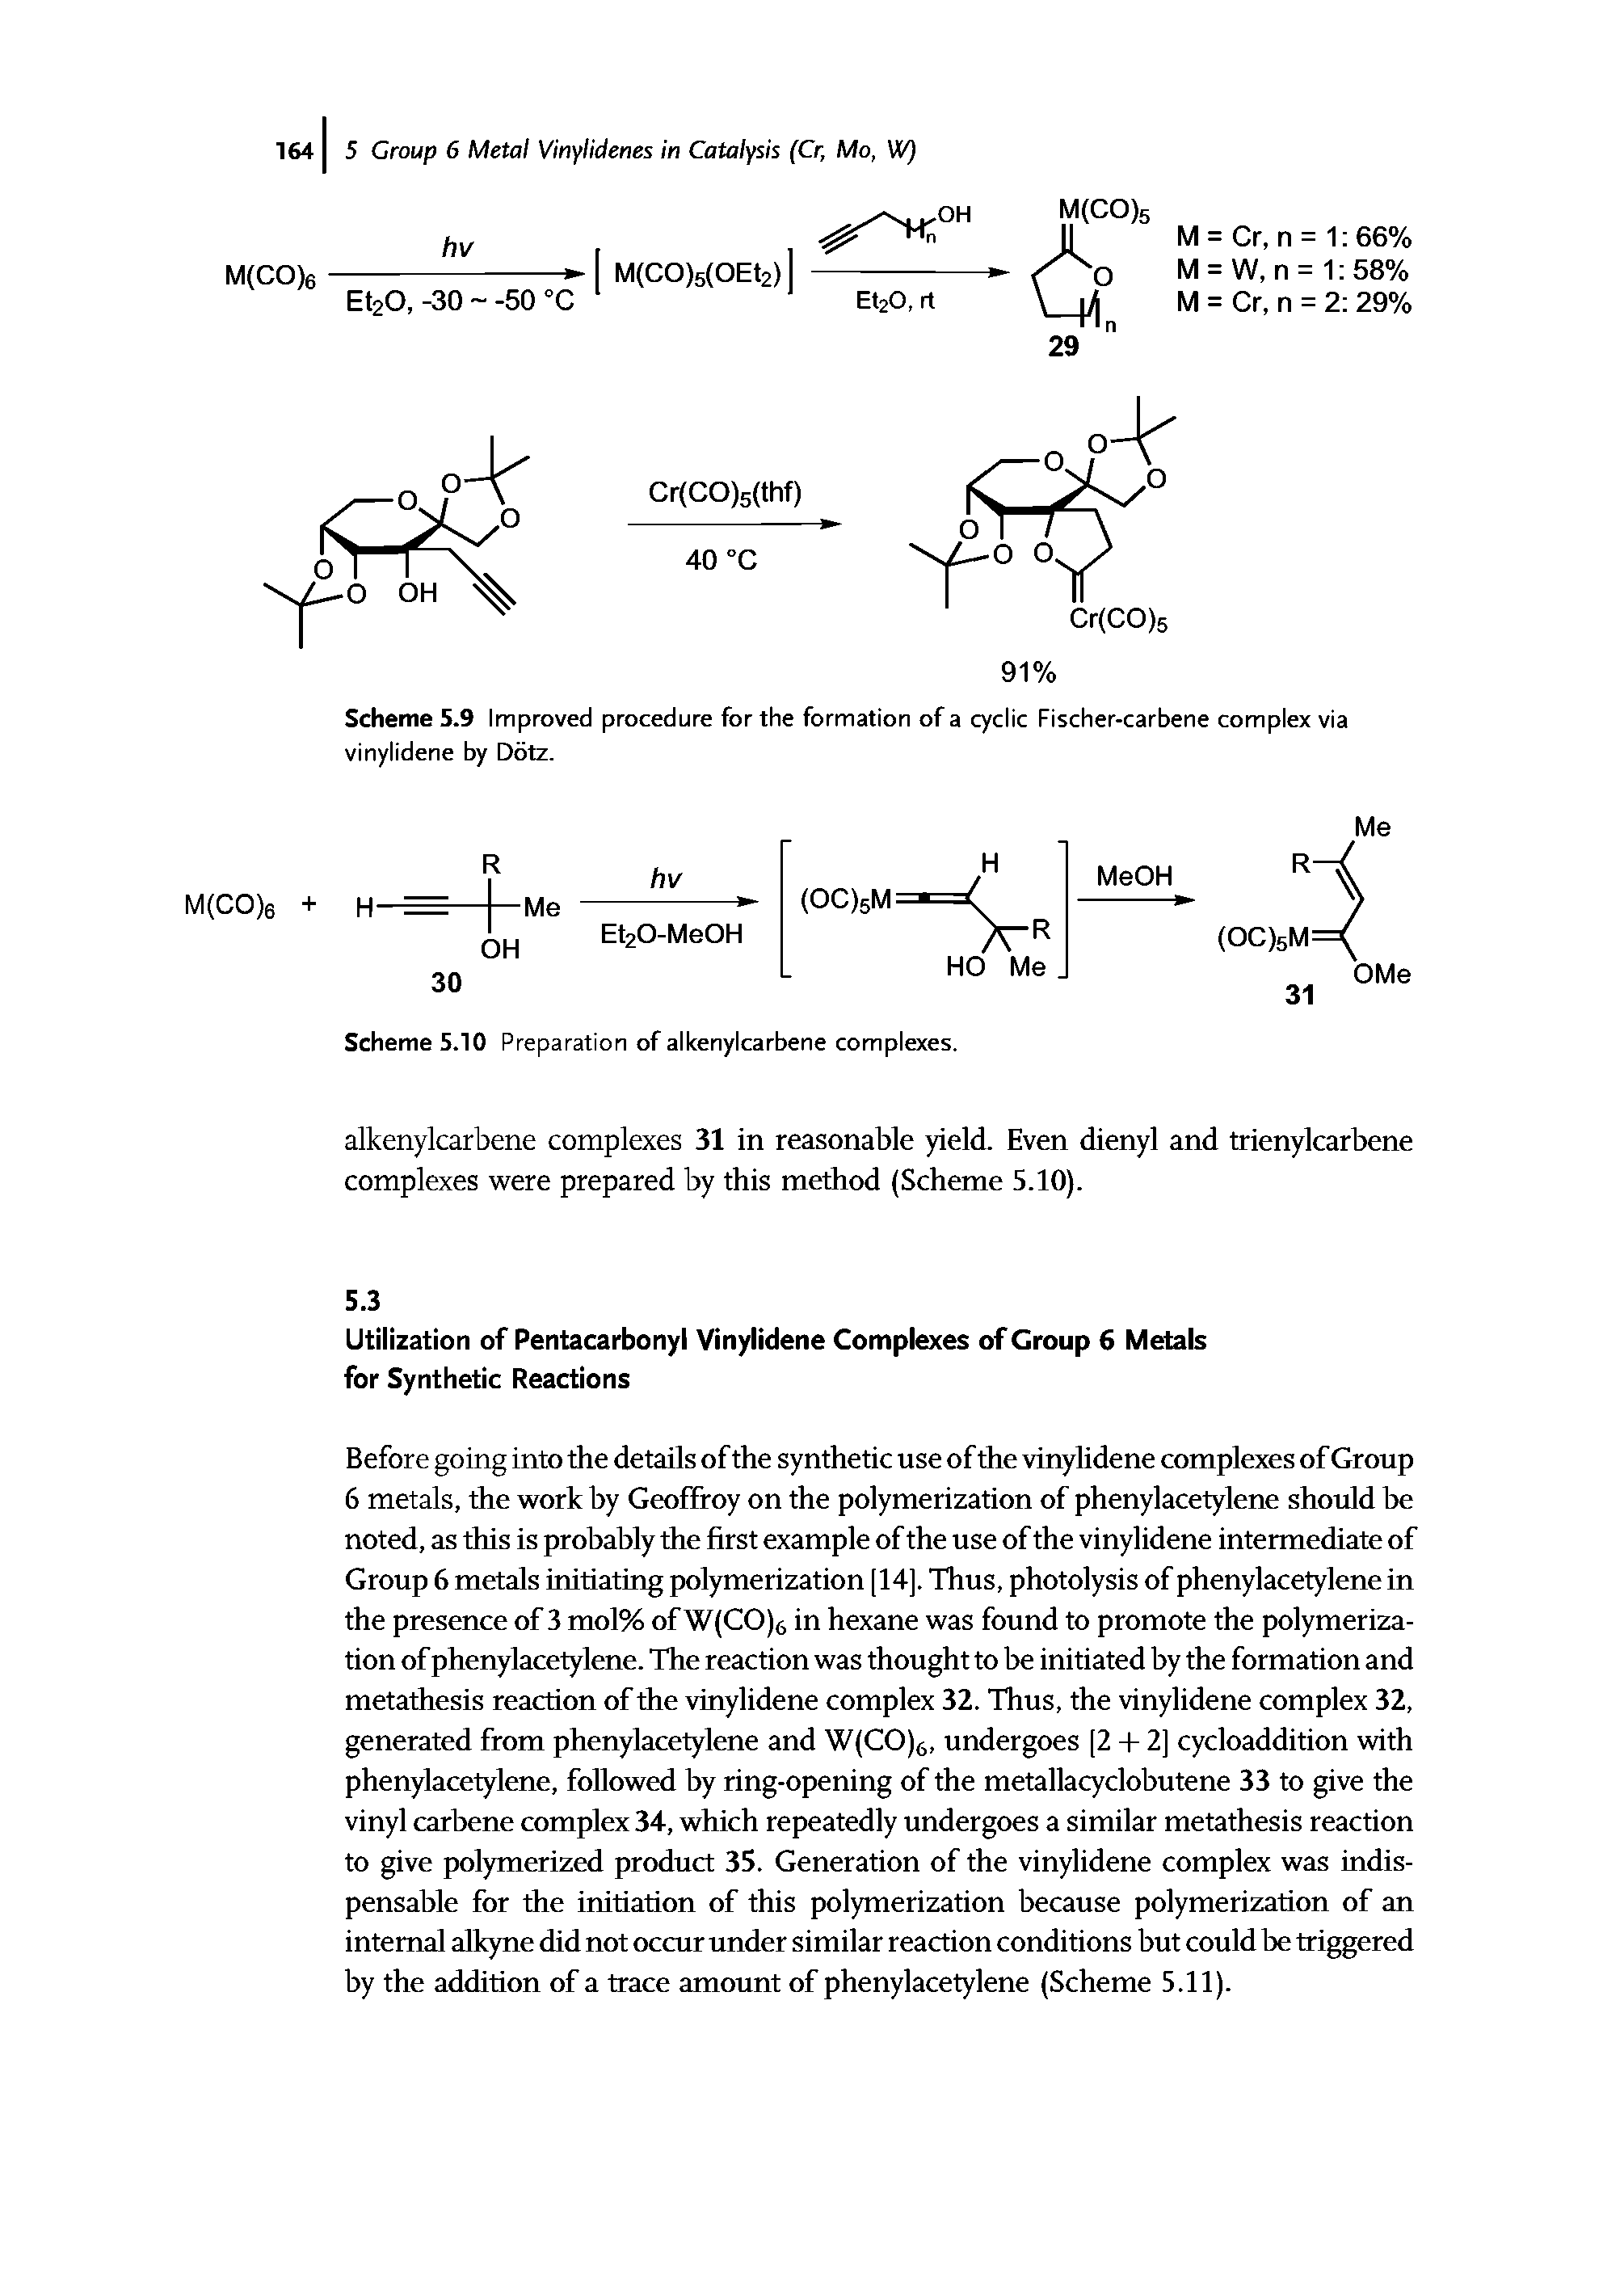 Scheme 5.9 Improved procedure for the formation of a cyclic Fischer-carbene complex via vinylidene by Ddtz.